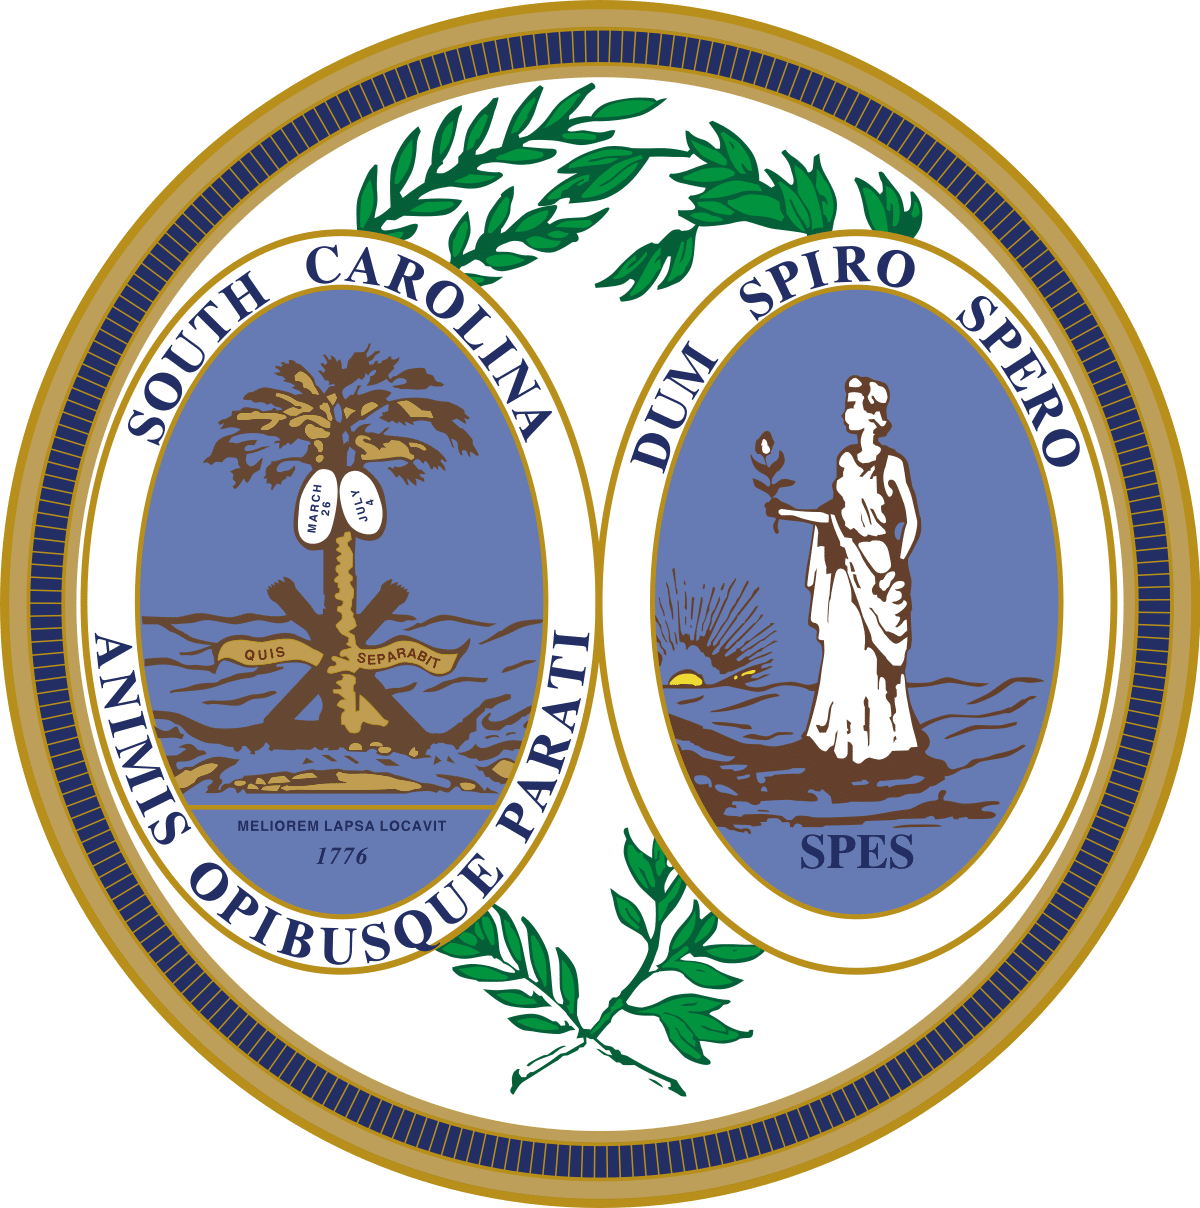 South Carolina Department of Revenue Alcohol Beverage Licensing seal